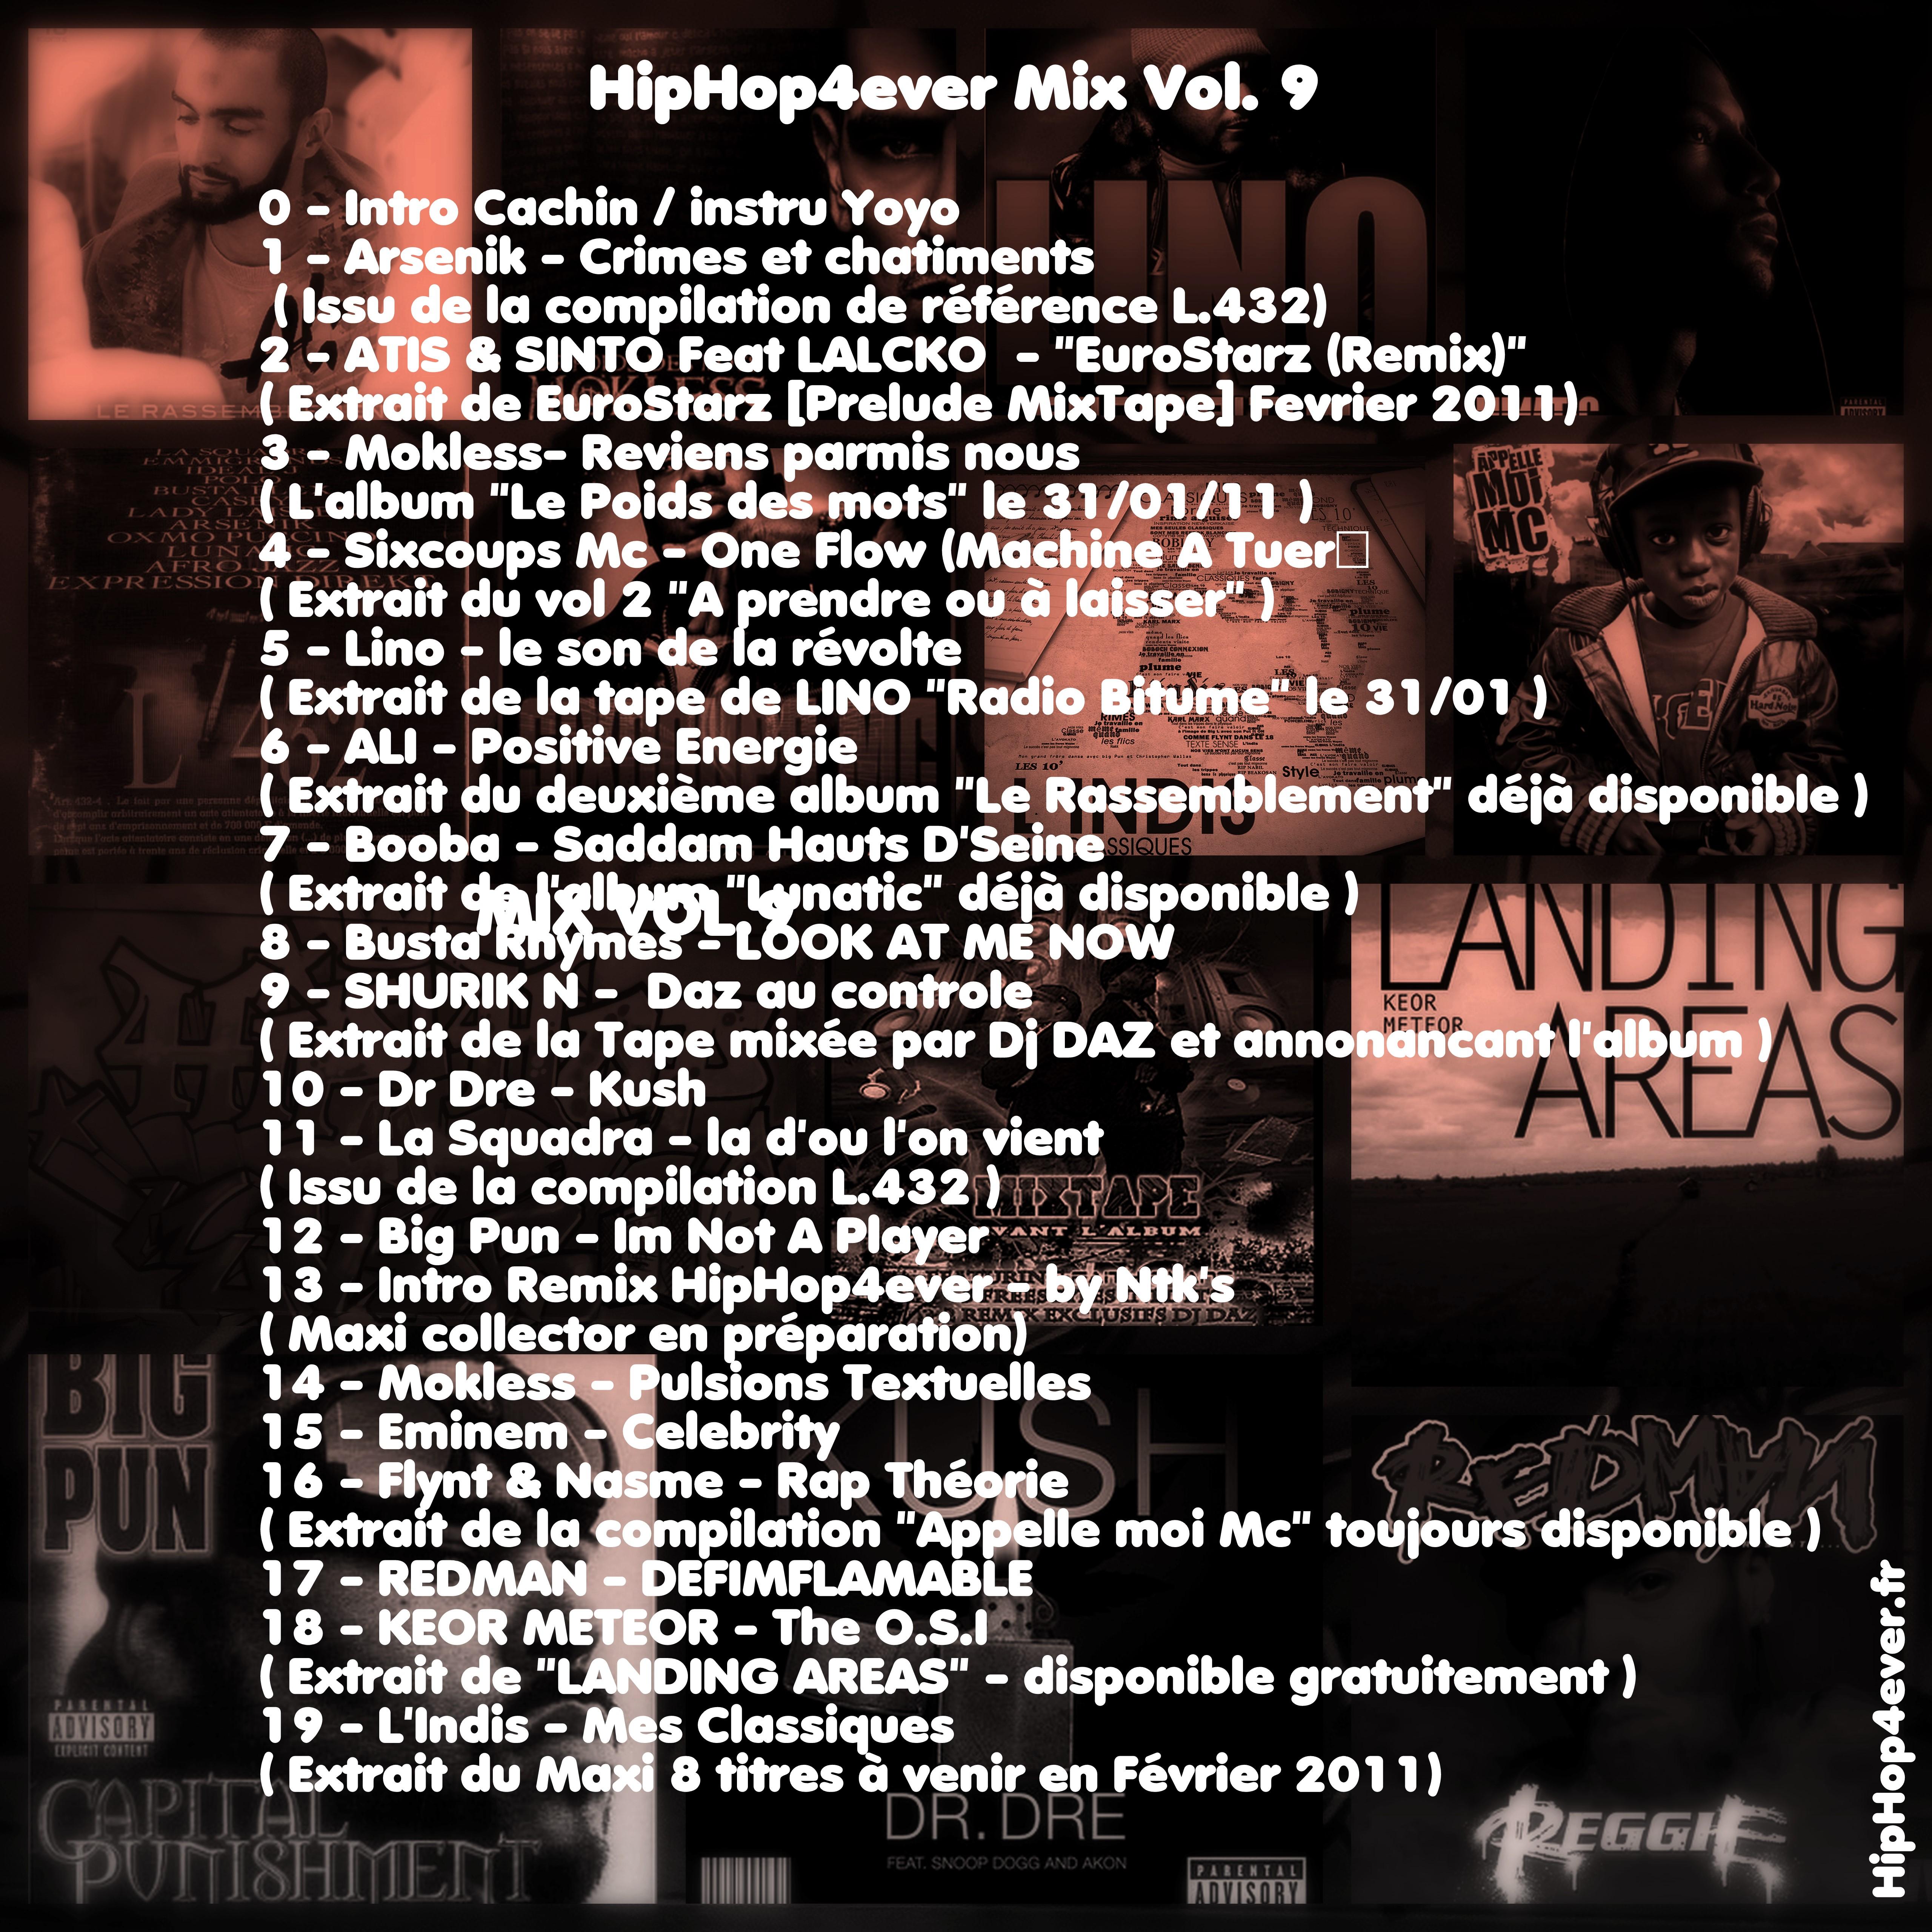 hiphop4ever-mix-vol-9-back